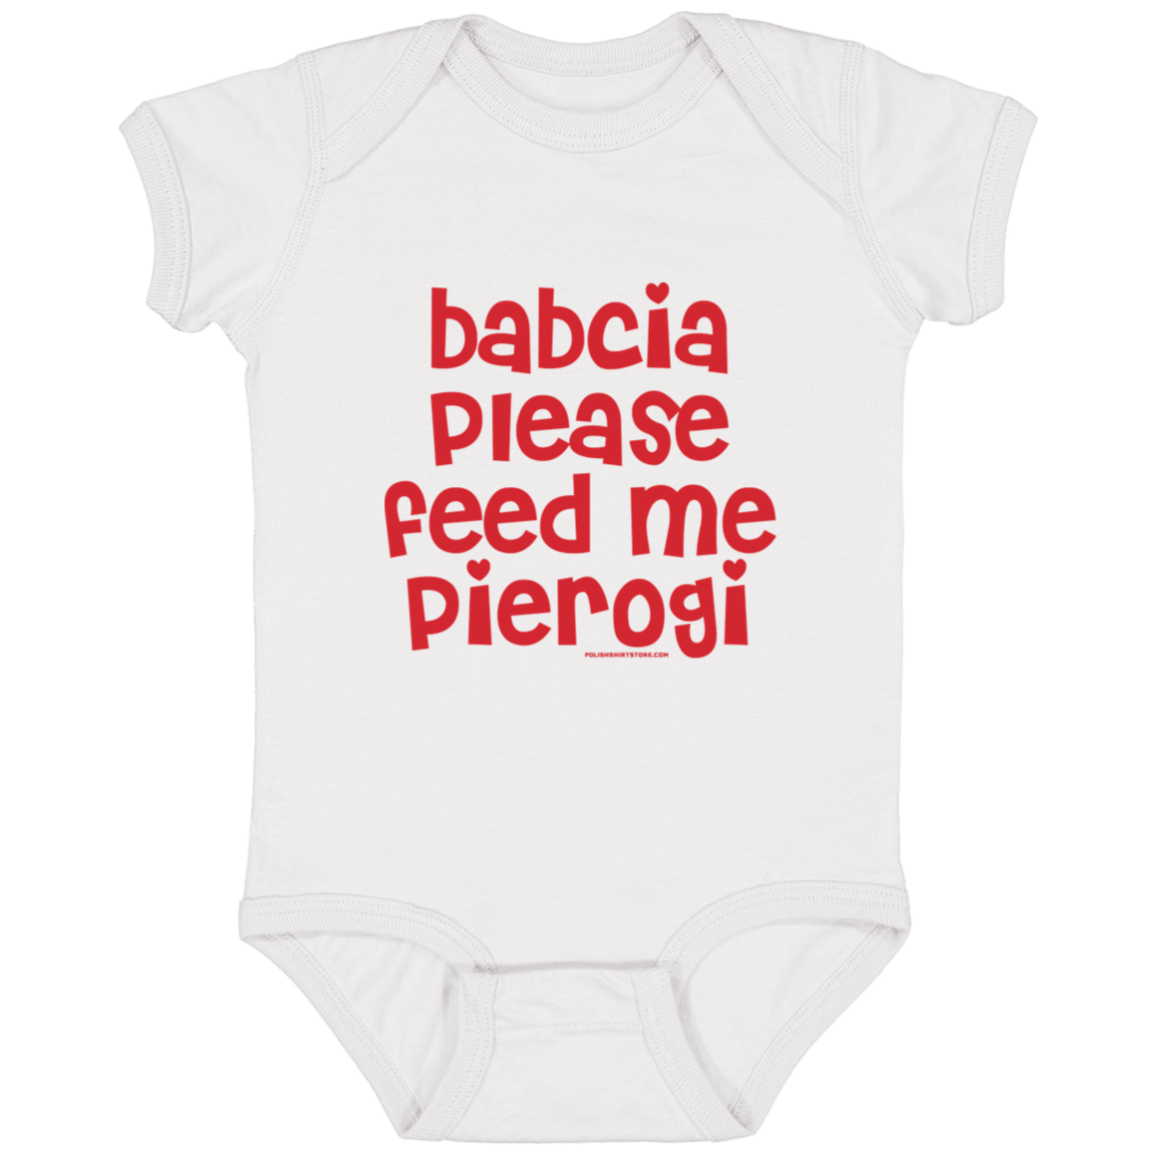 Babcia Please Feed Me Pierogi Infant Bodysuit Baby CustomCat White Newborn 